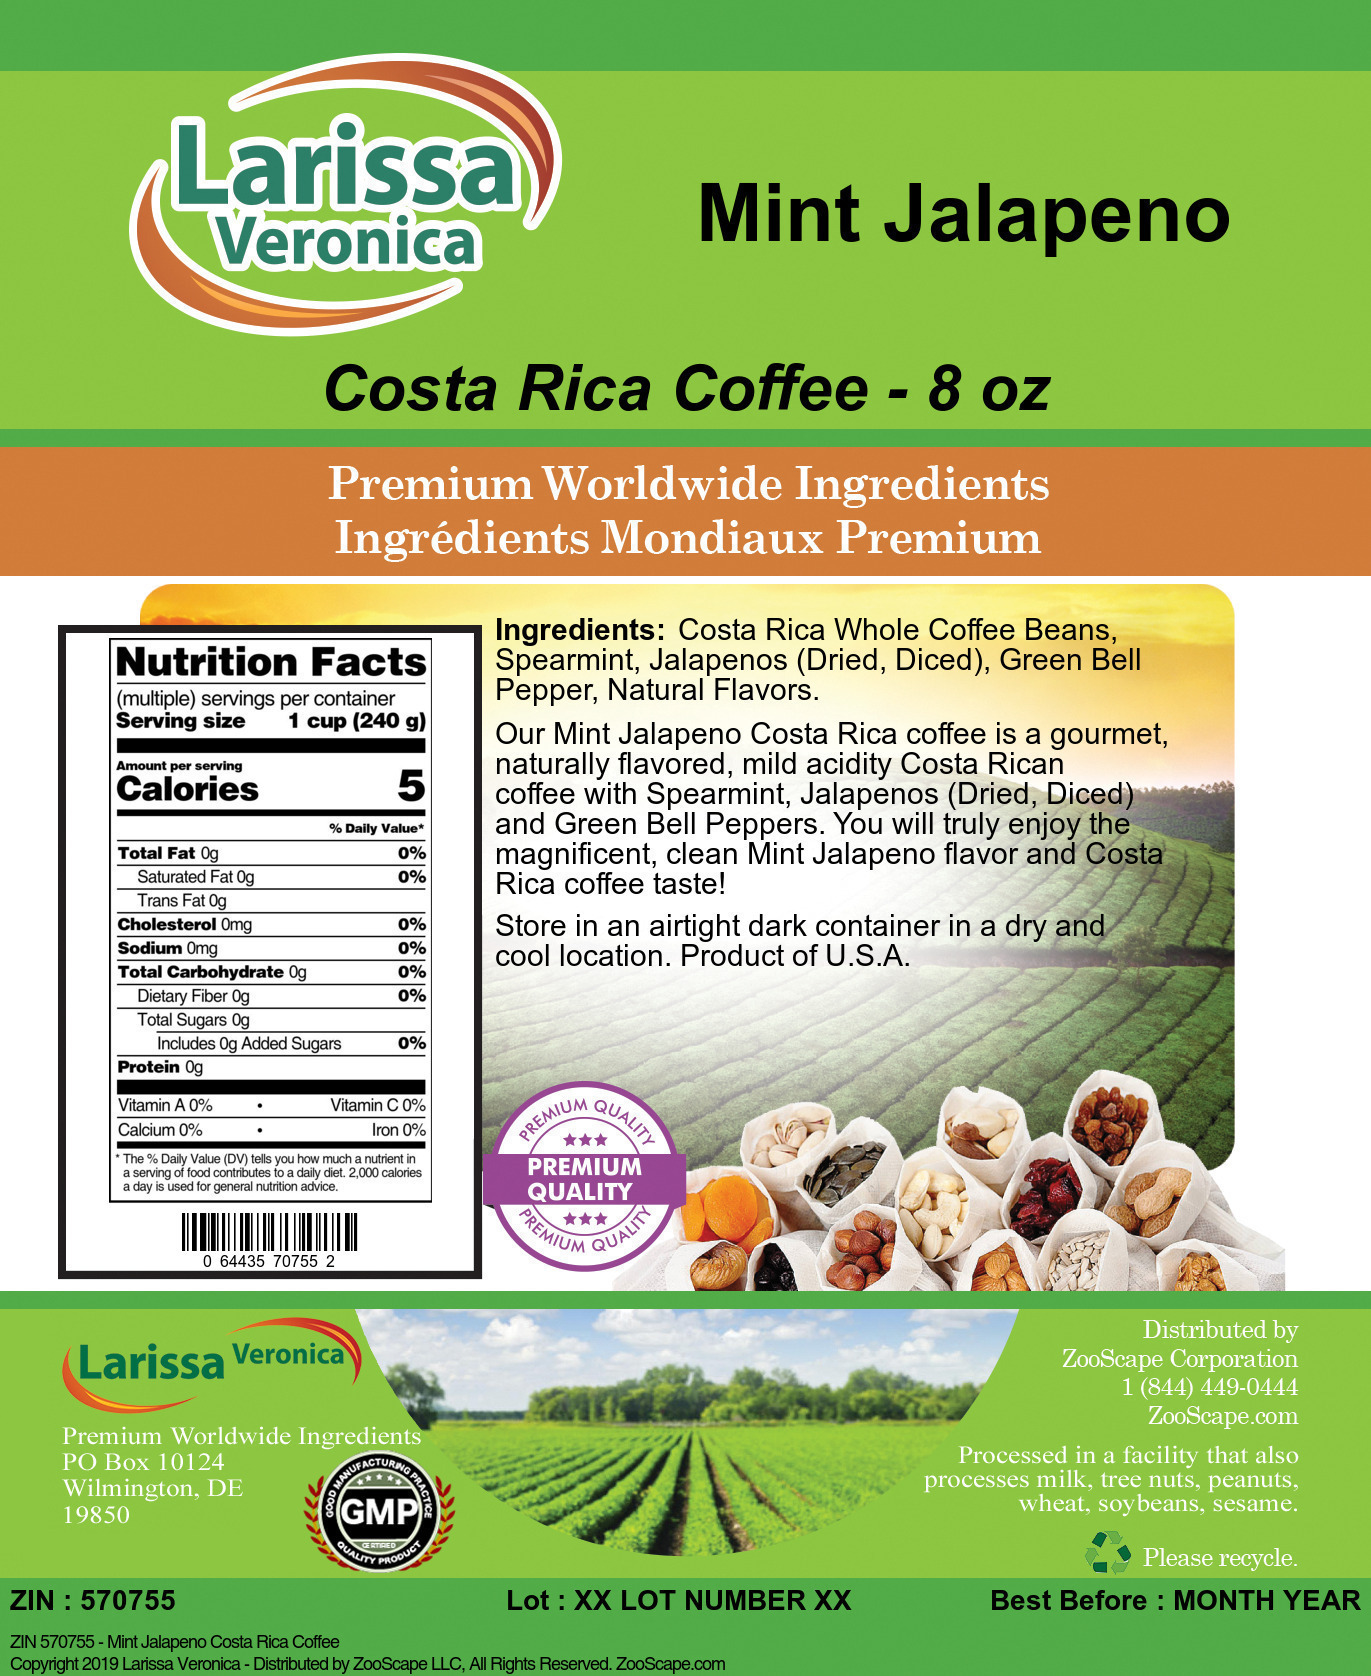 Mint Jalapeno Costa Rica Coffee - Label